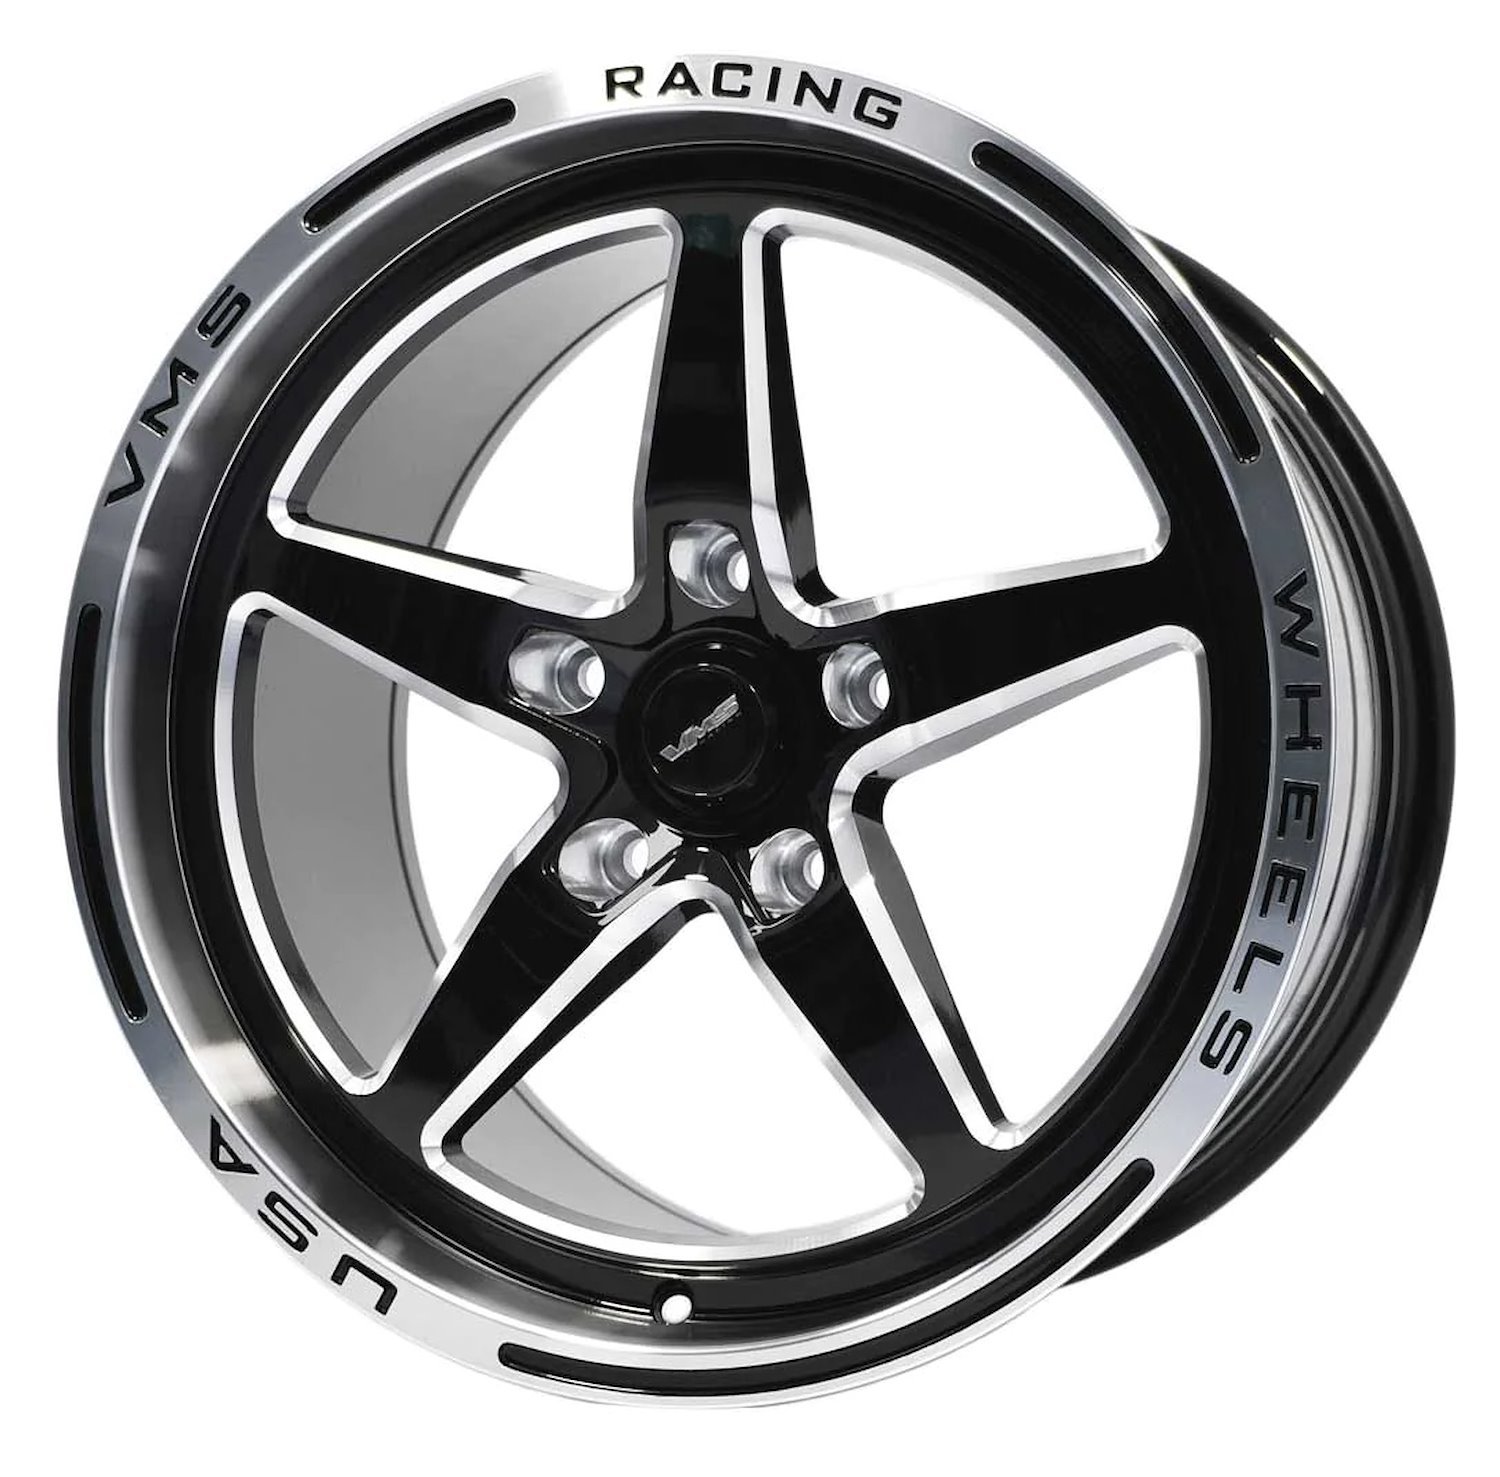 VWST033 V-Star Wheel, Size: 17" x 10", Bolt Pattern: 5 x 115 mm [Finish: Gloss Black Milled/Polished Lip]